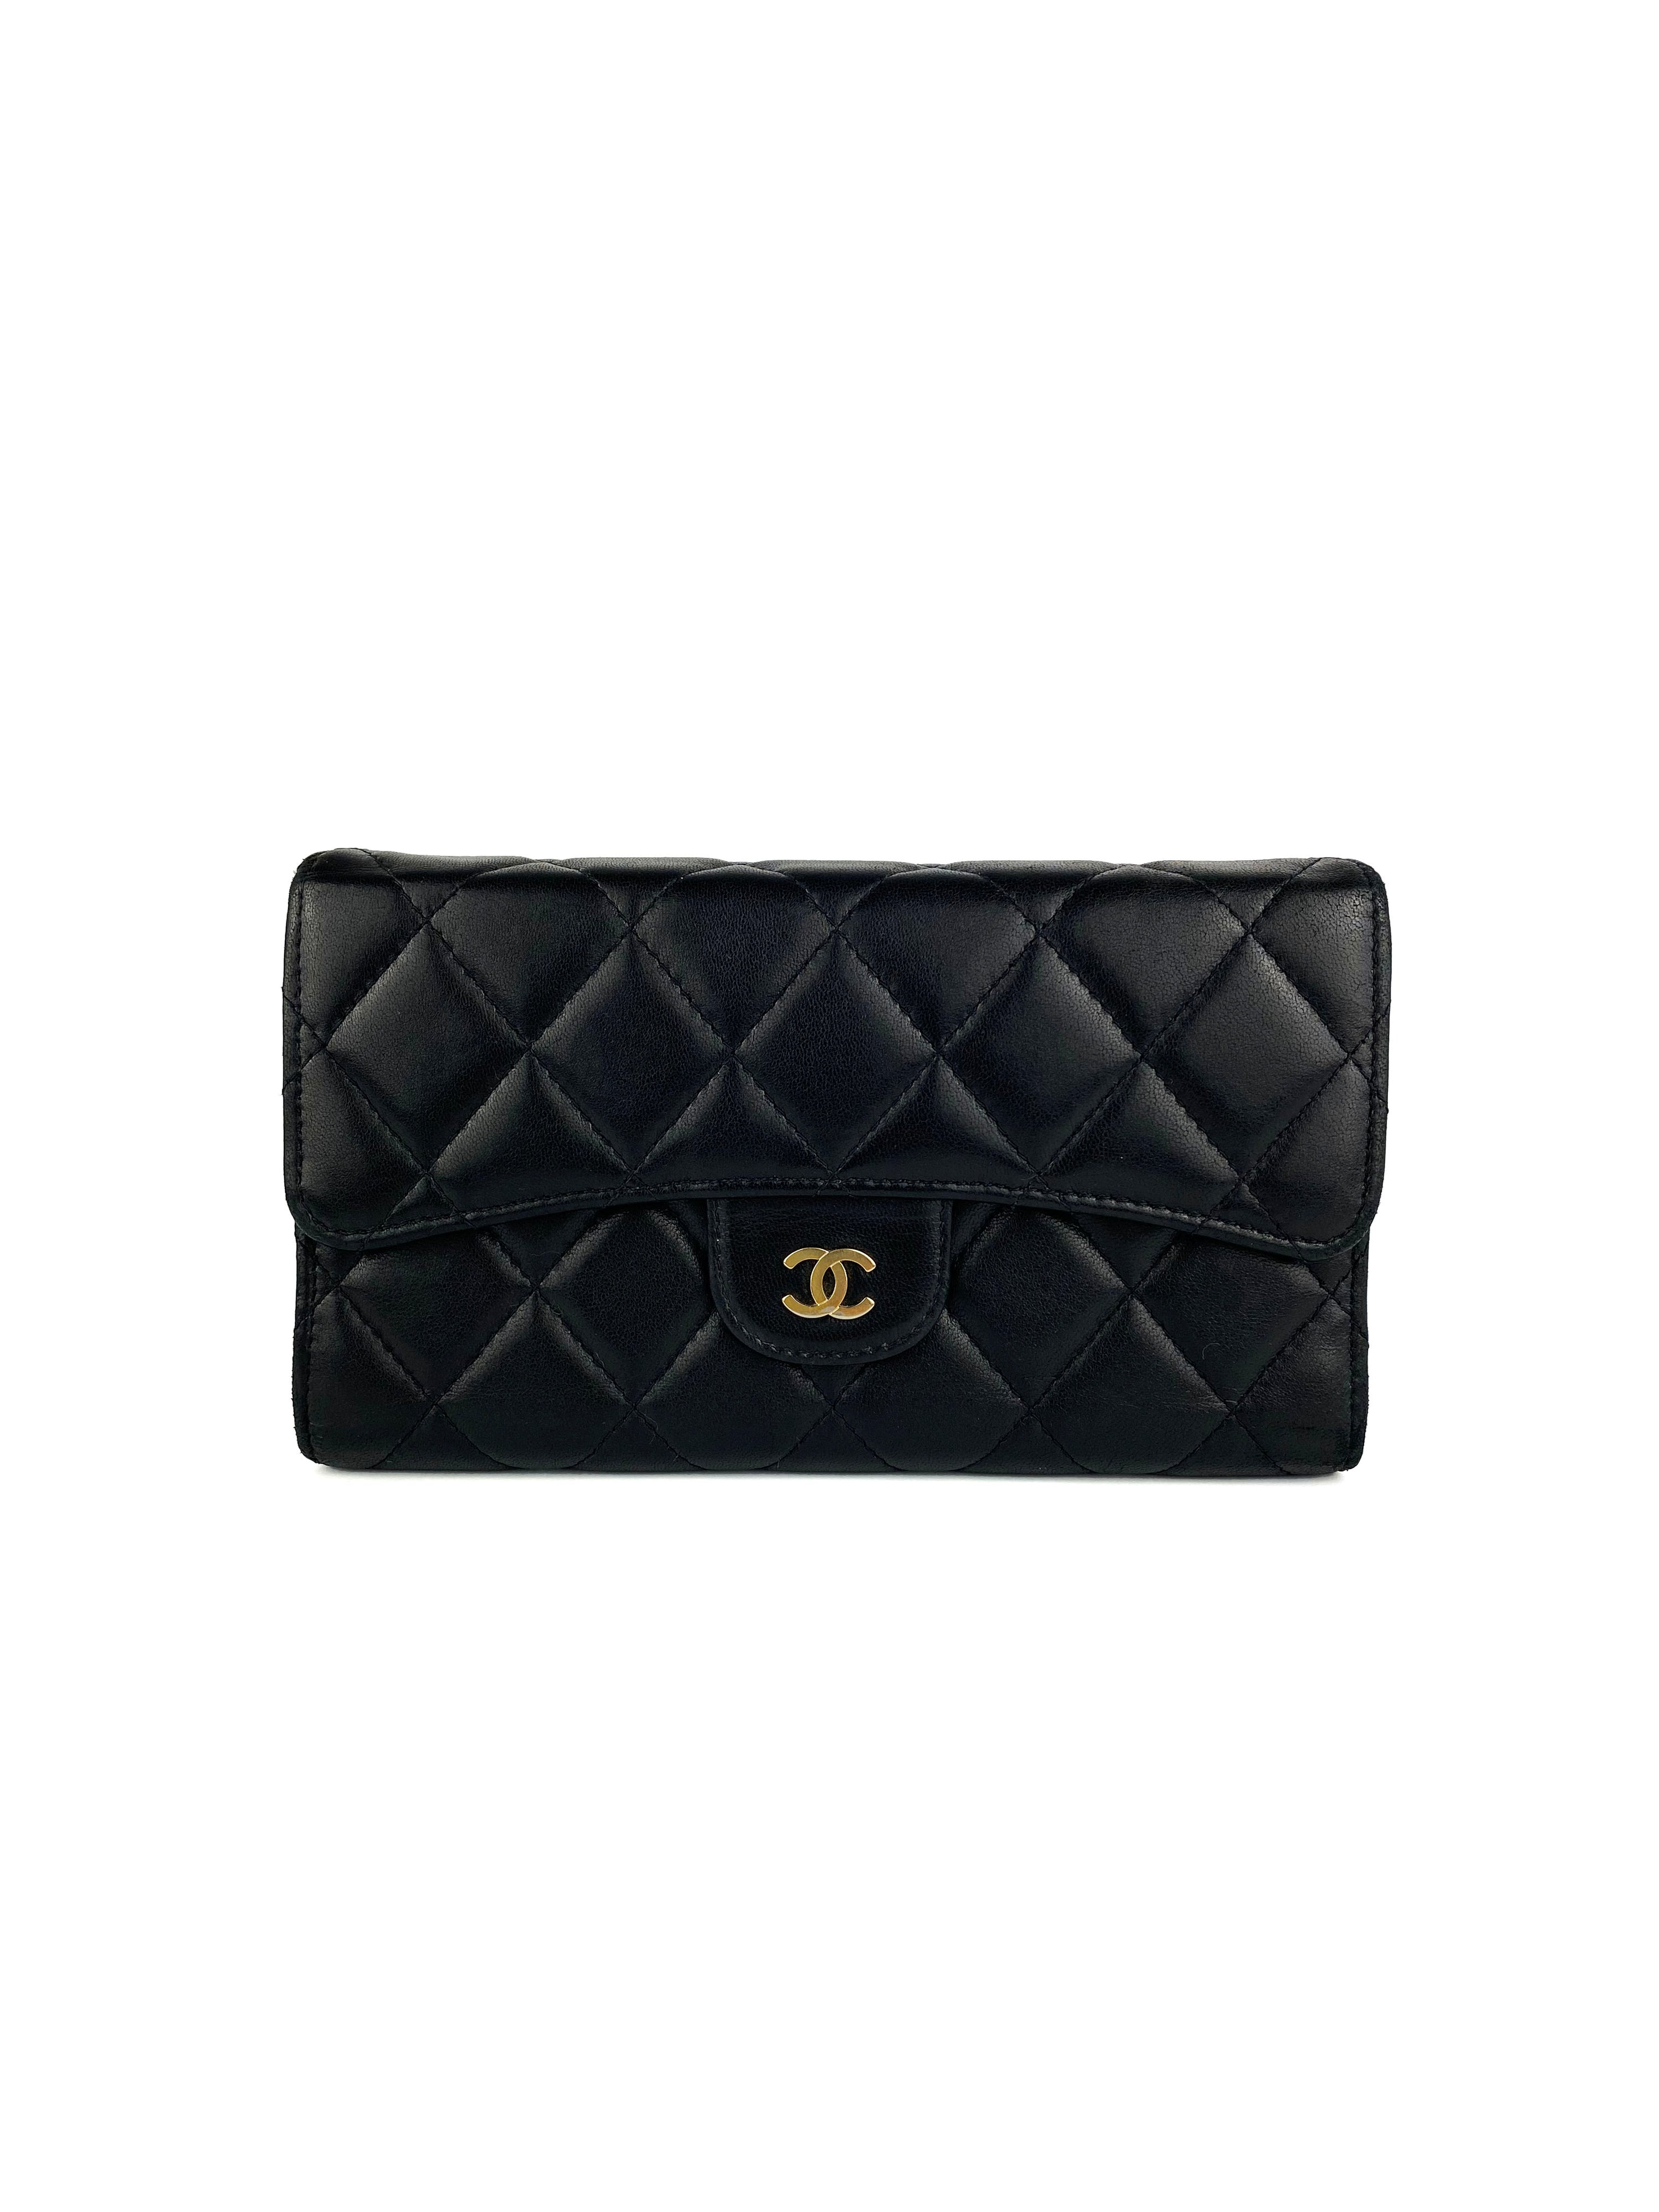 Chanel Black Classic Flap Wallet